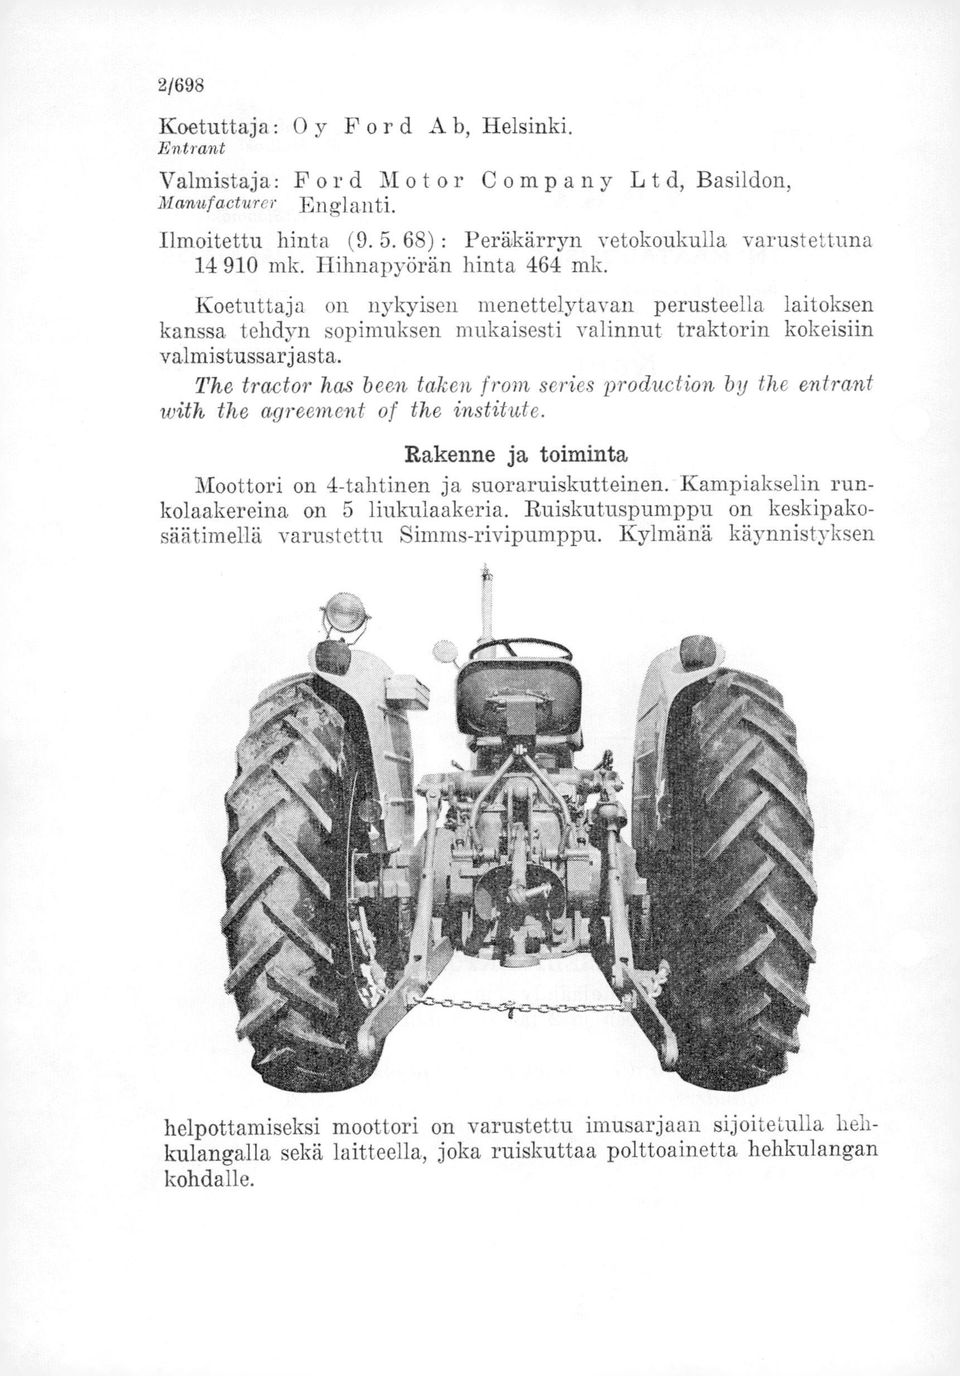 The tractor has been taken from series production by the entrant with the agreement of the institute. Rakenne ja toiminta Moottori on 4-tahtinen ja suoraruiskutteinen.